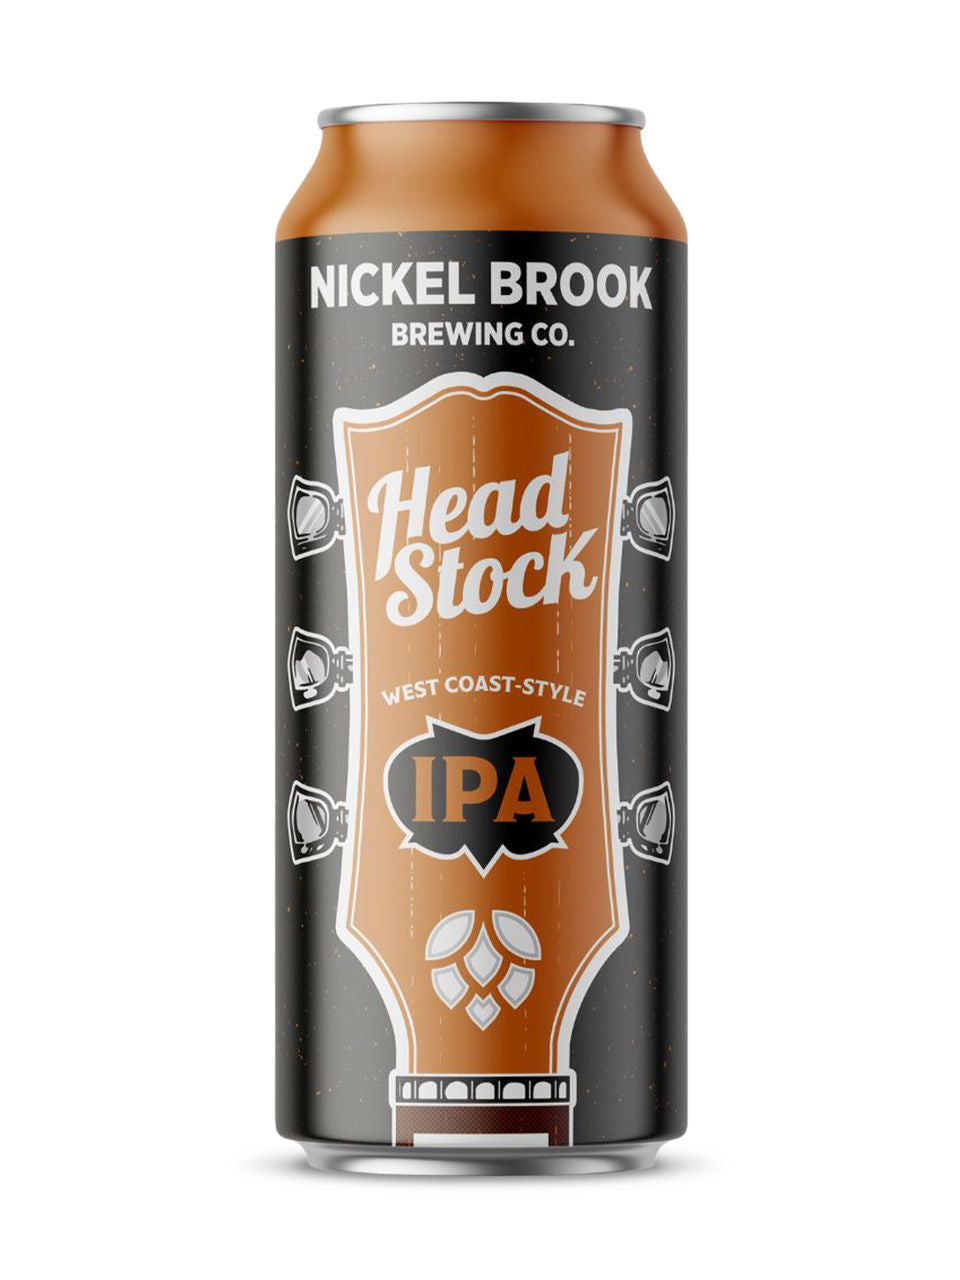 Nickel Brook Head Stock West Coast-Style IPA 473 mL can